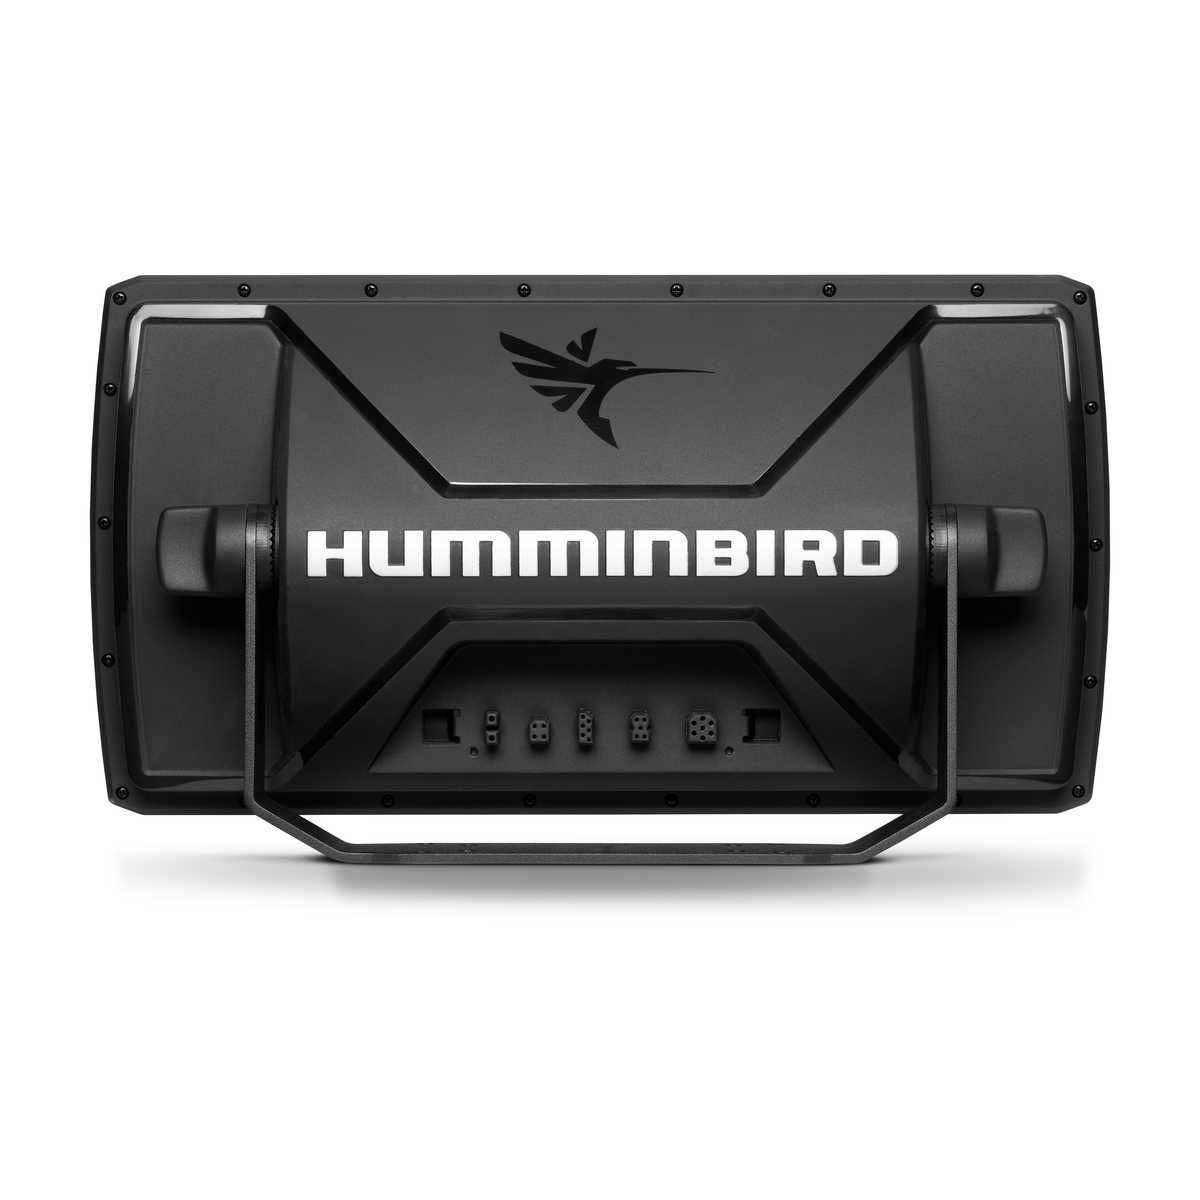 Ехолот Картплоттер Humminbird HELIX 10 CHIRP MEGA SI+ GPS G4N 411420-1